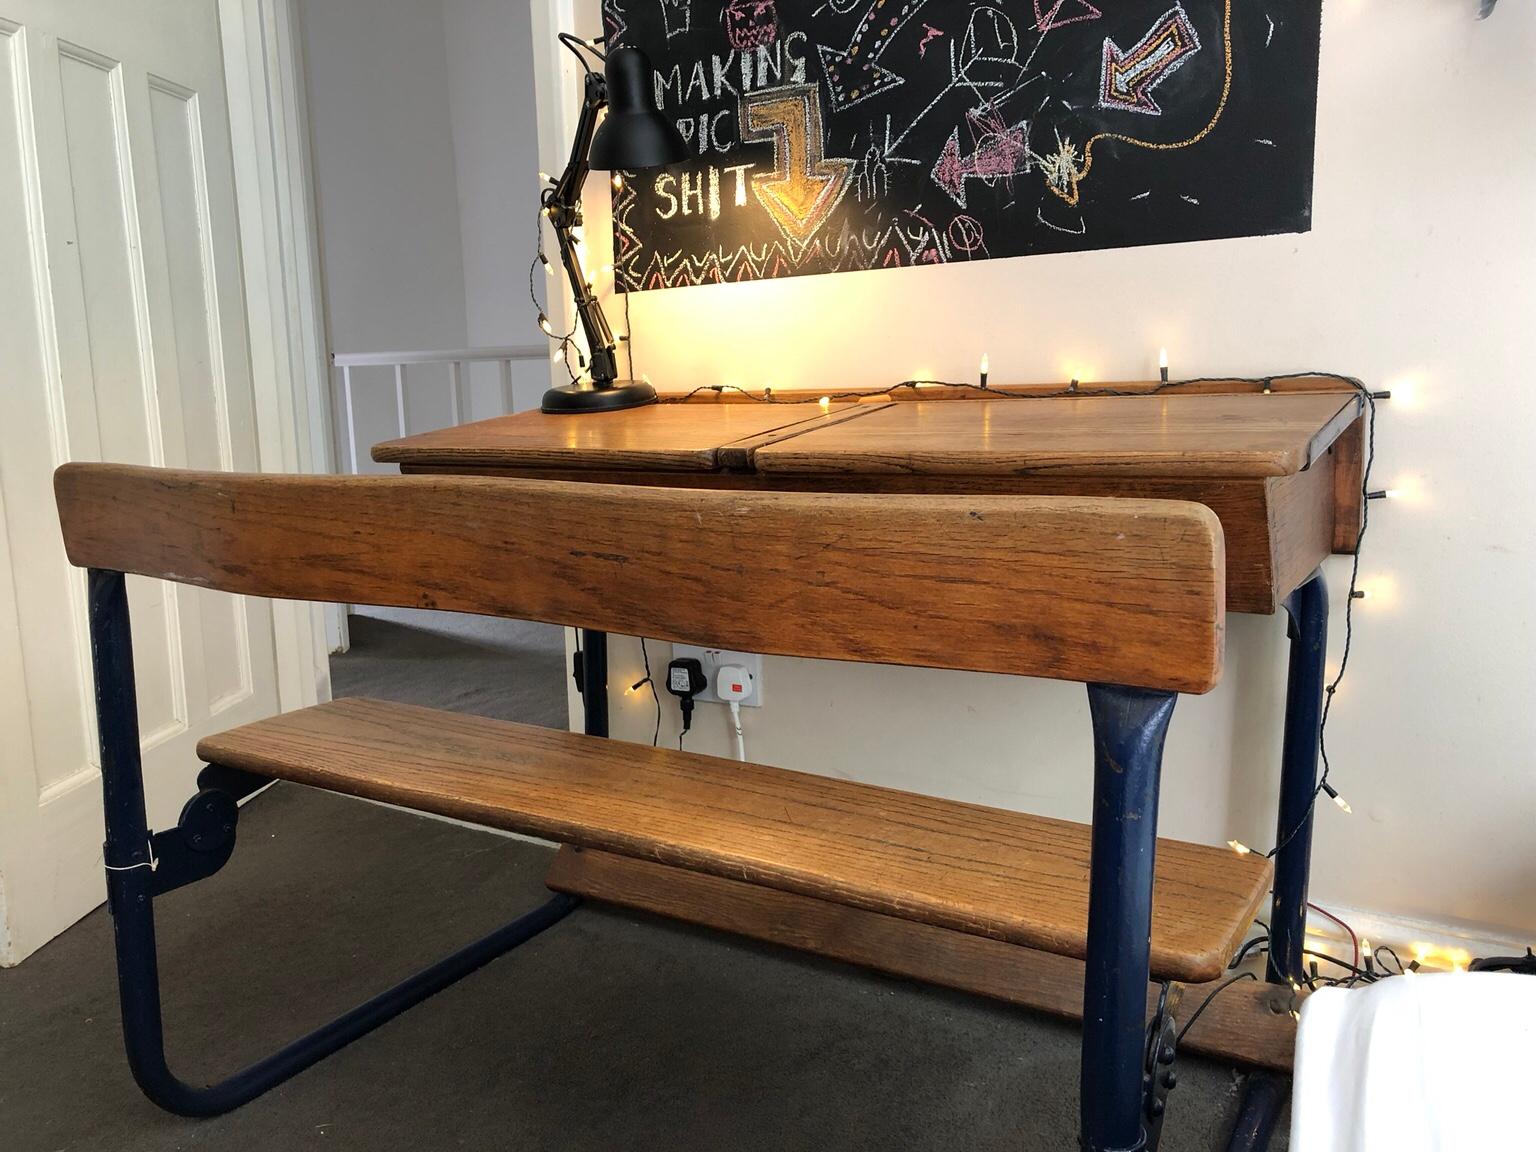 Vintage School Desk For Sale In Bn3 Hove For 120 00 For Sale